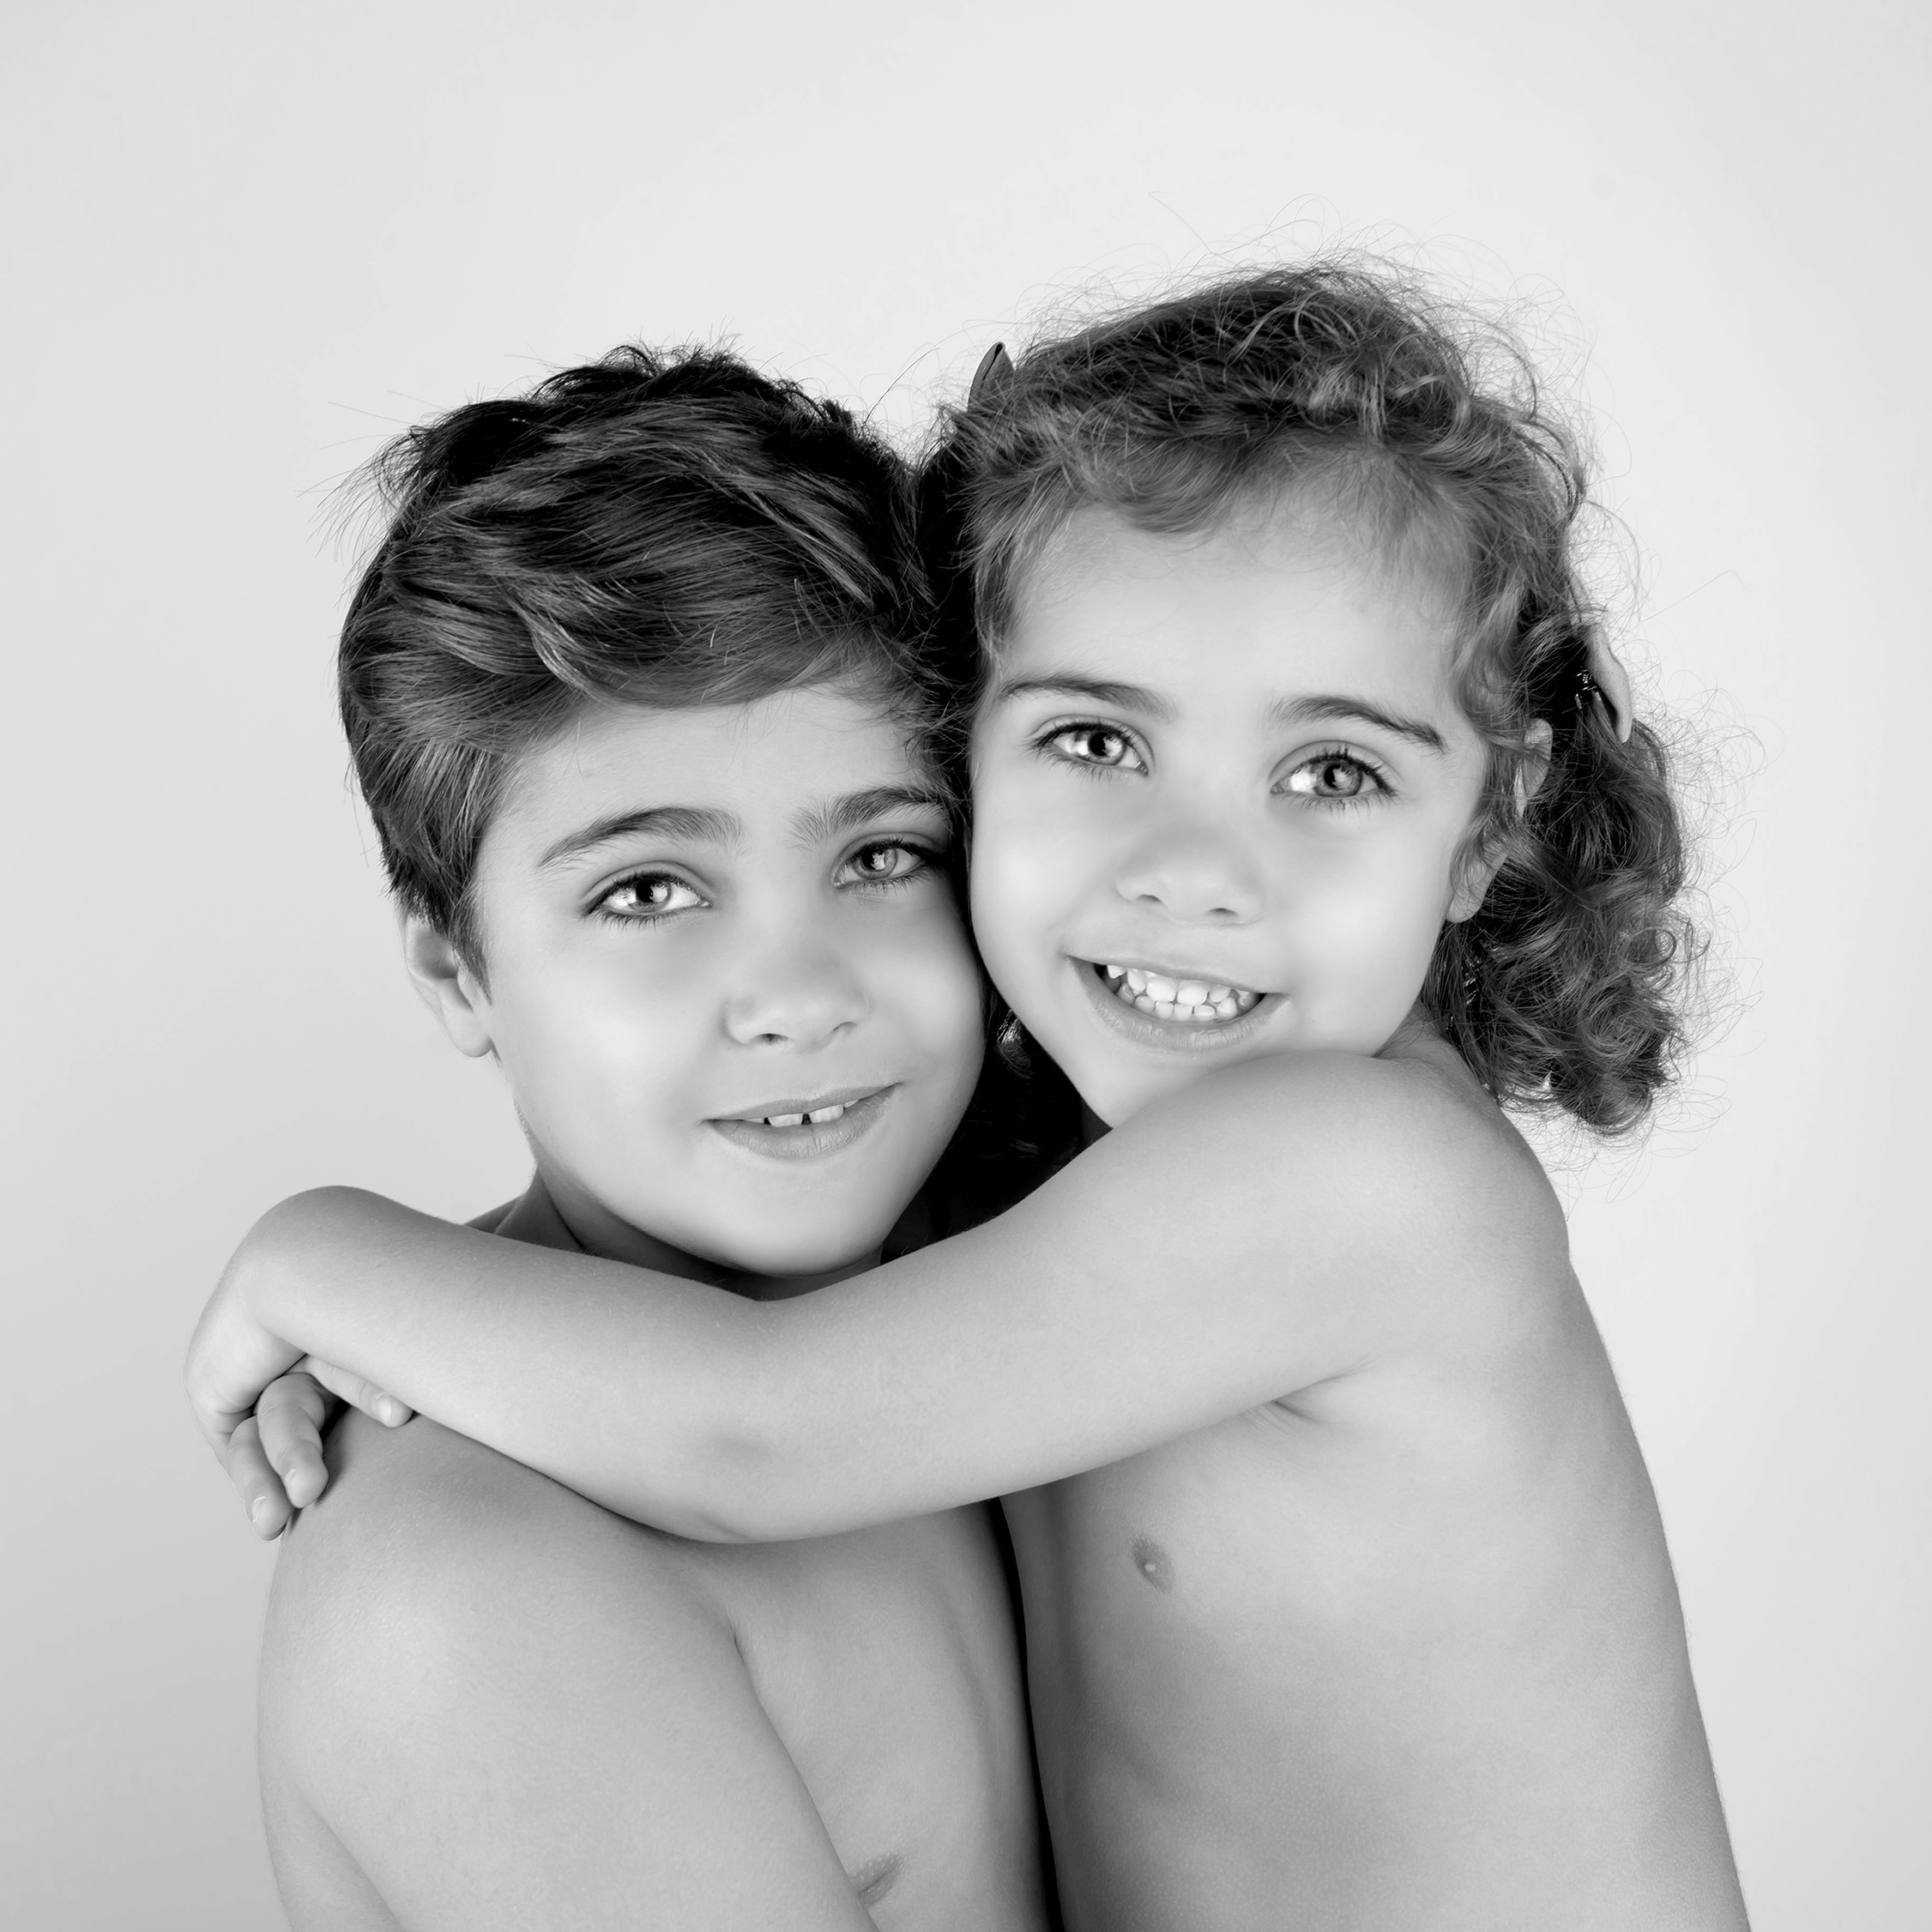 fotografa infantil para niños y nñas